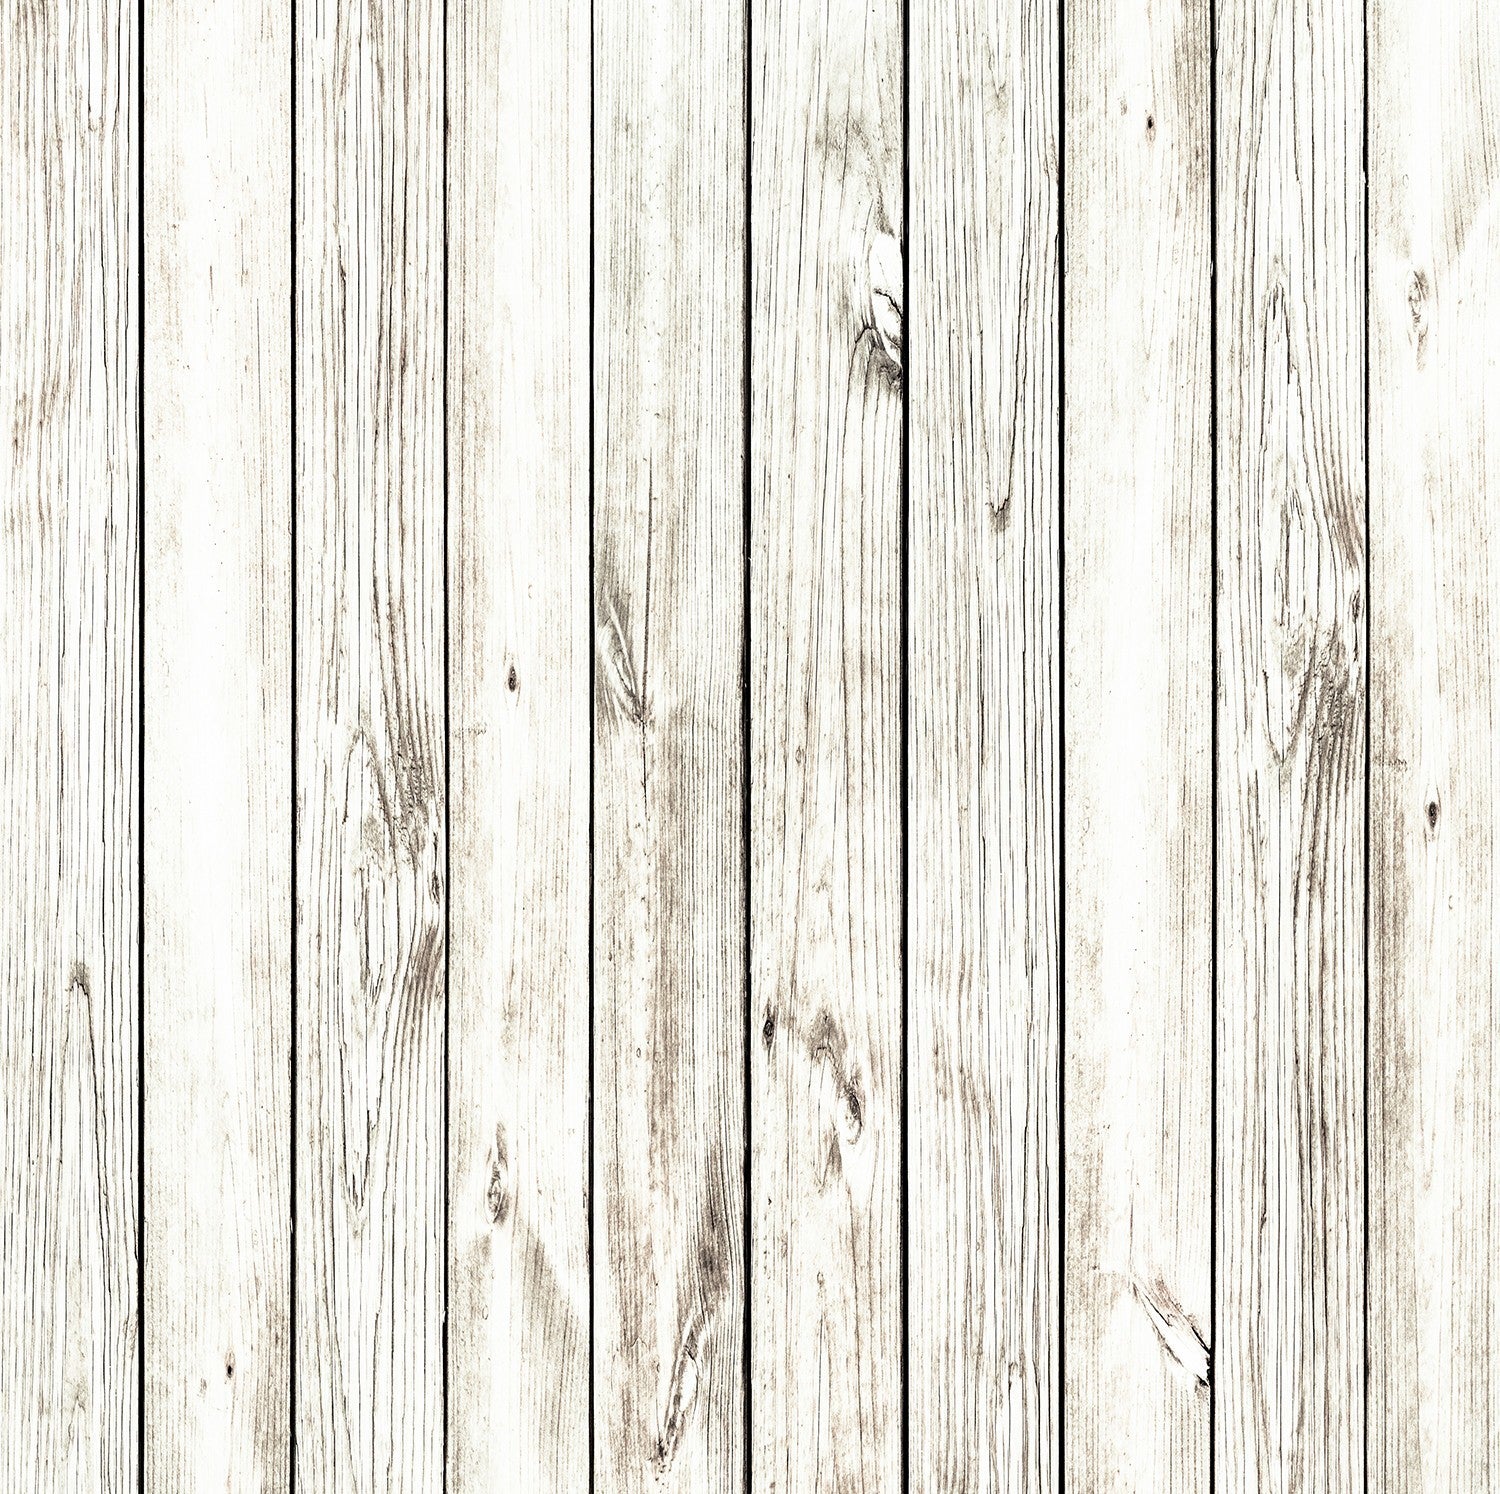 StudioPRO Vinyl Picturesque White Wood Floor Backdrop - (Choose Size) - Fovitec